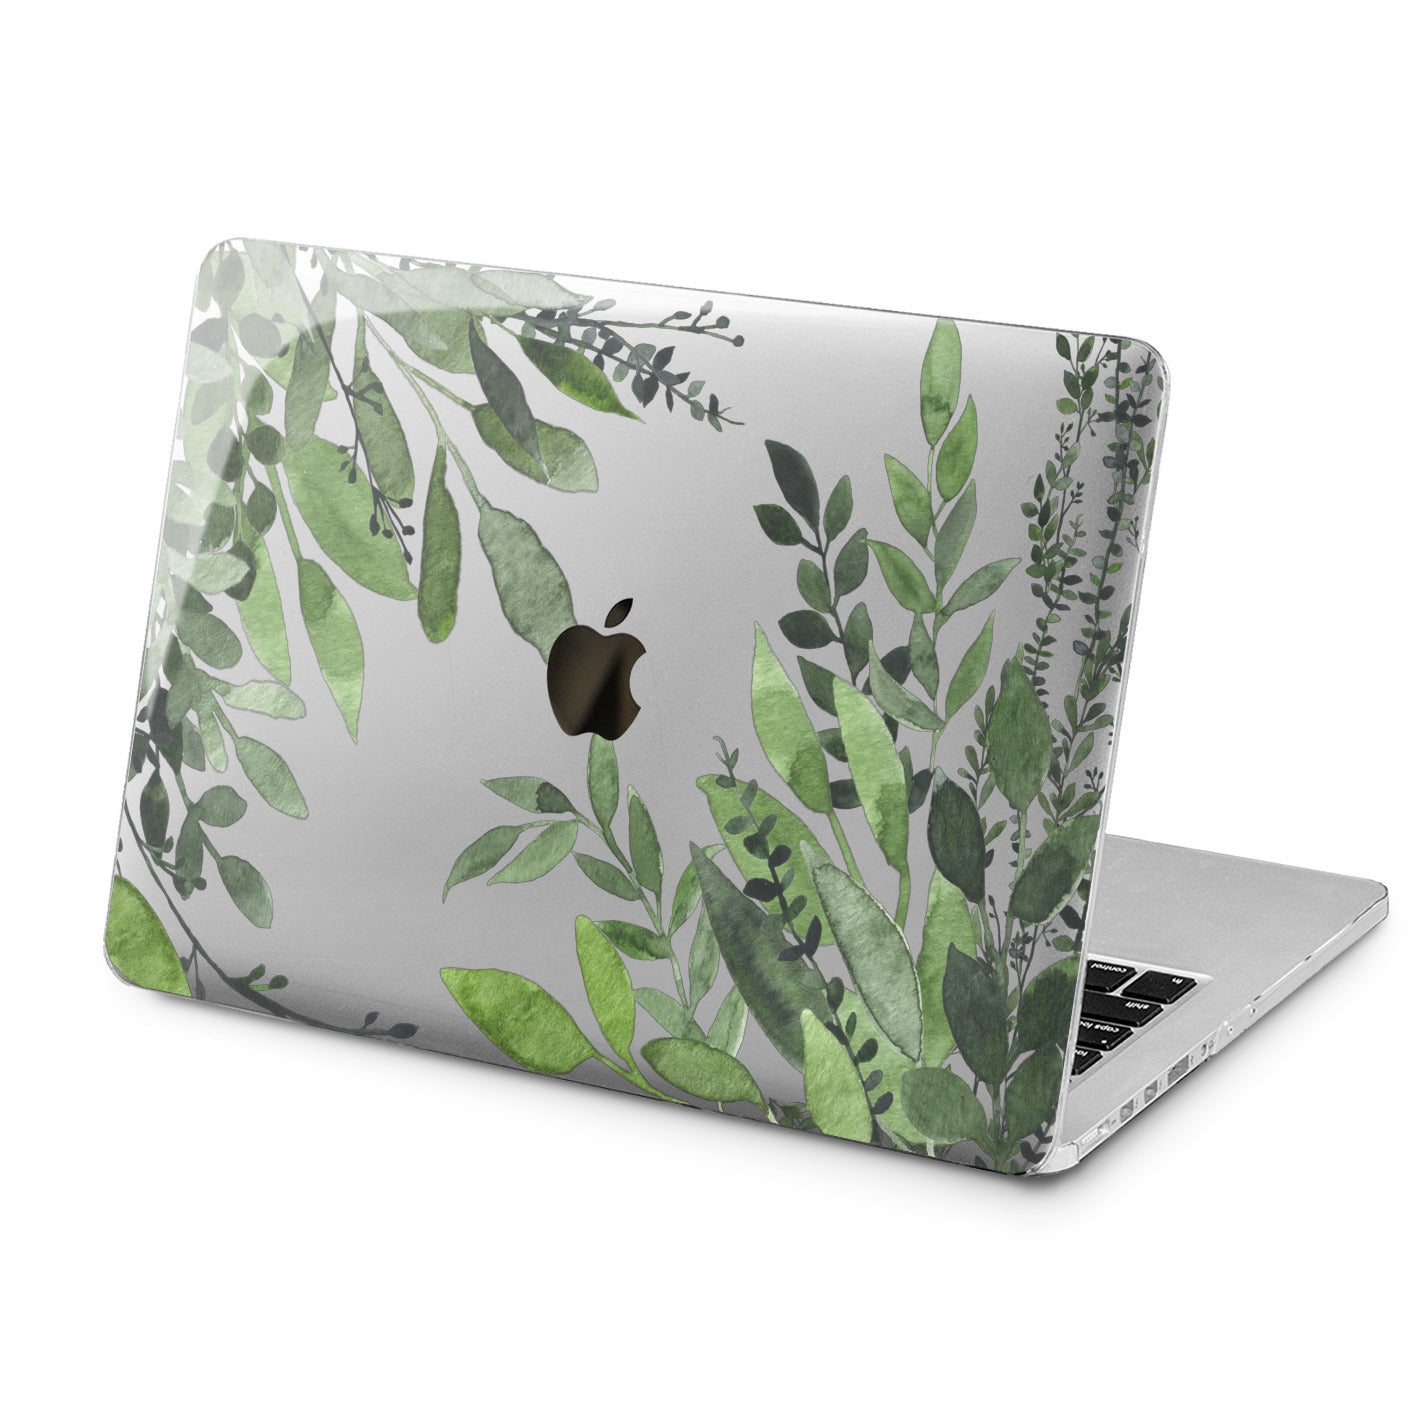 Lex Altern Green Leaves Design Case for your Laptop Apple Macbook.